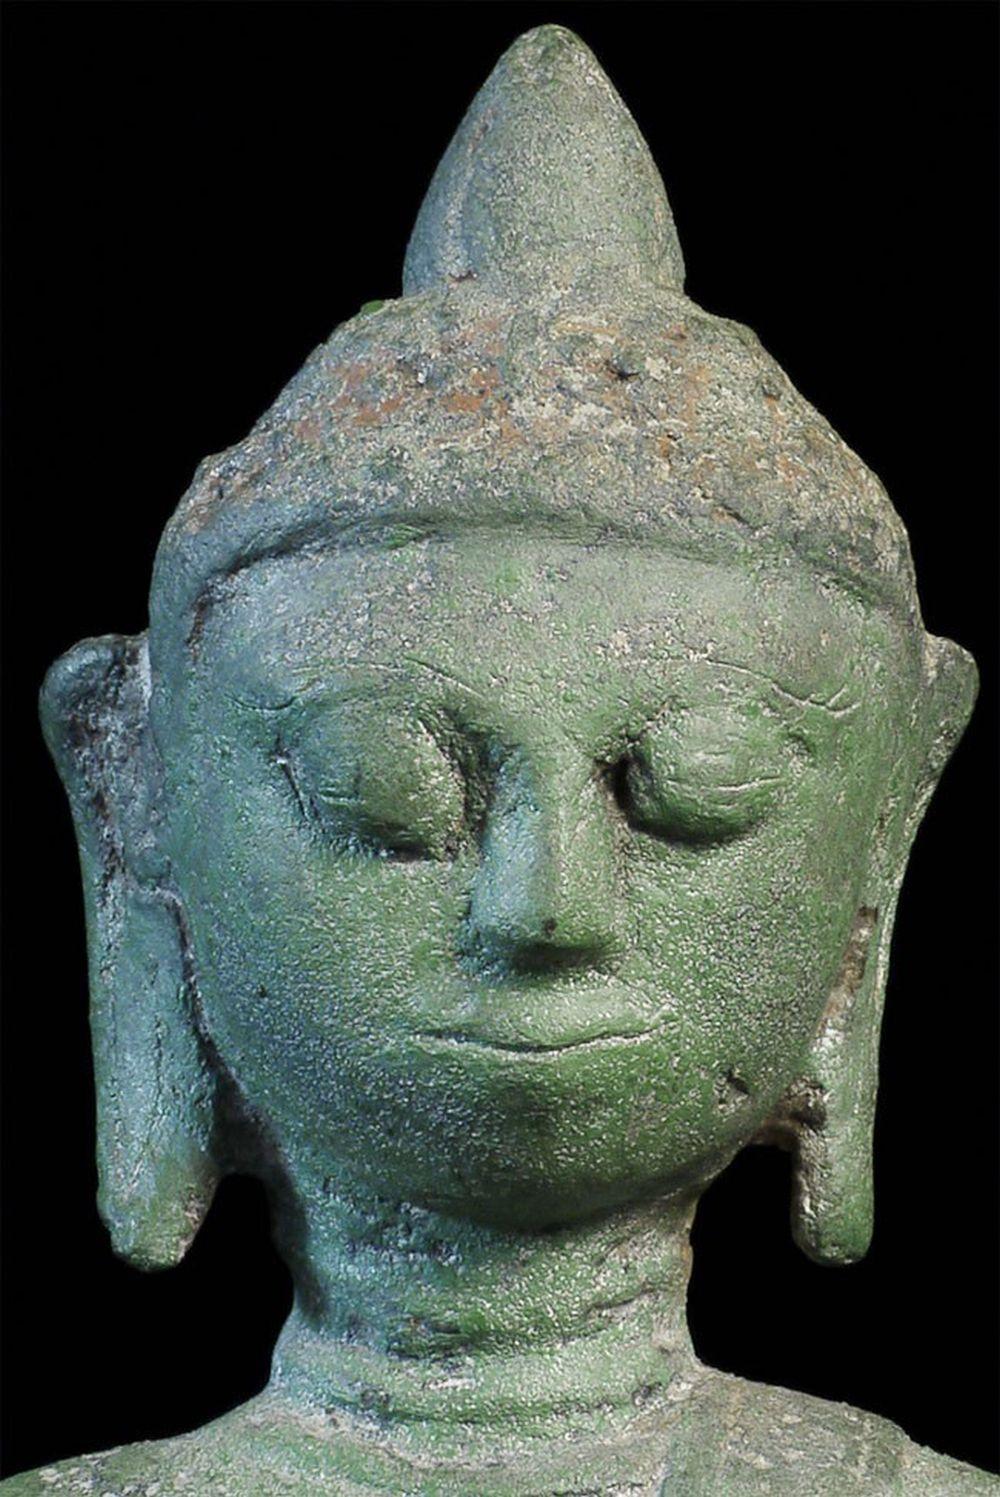  11. Jh. Bronze Buddha- Pyu/Pagan Burma Seltene, mächtige Antike- TL Test! - 8439 im Angebot 2